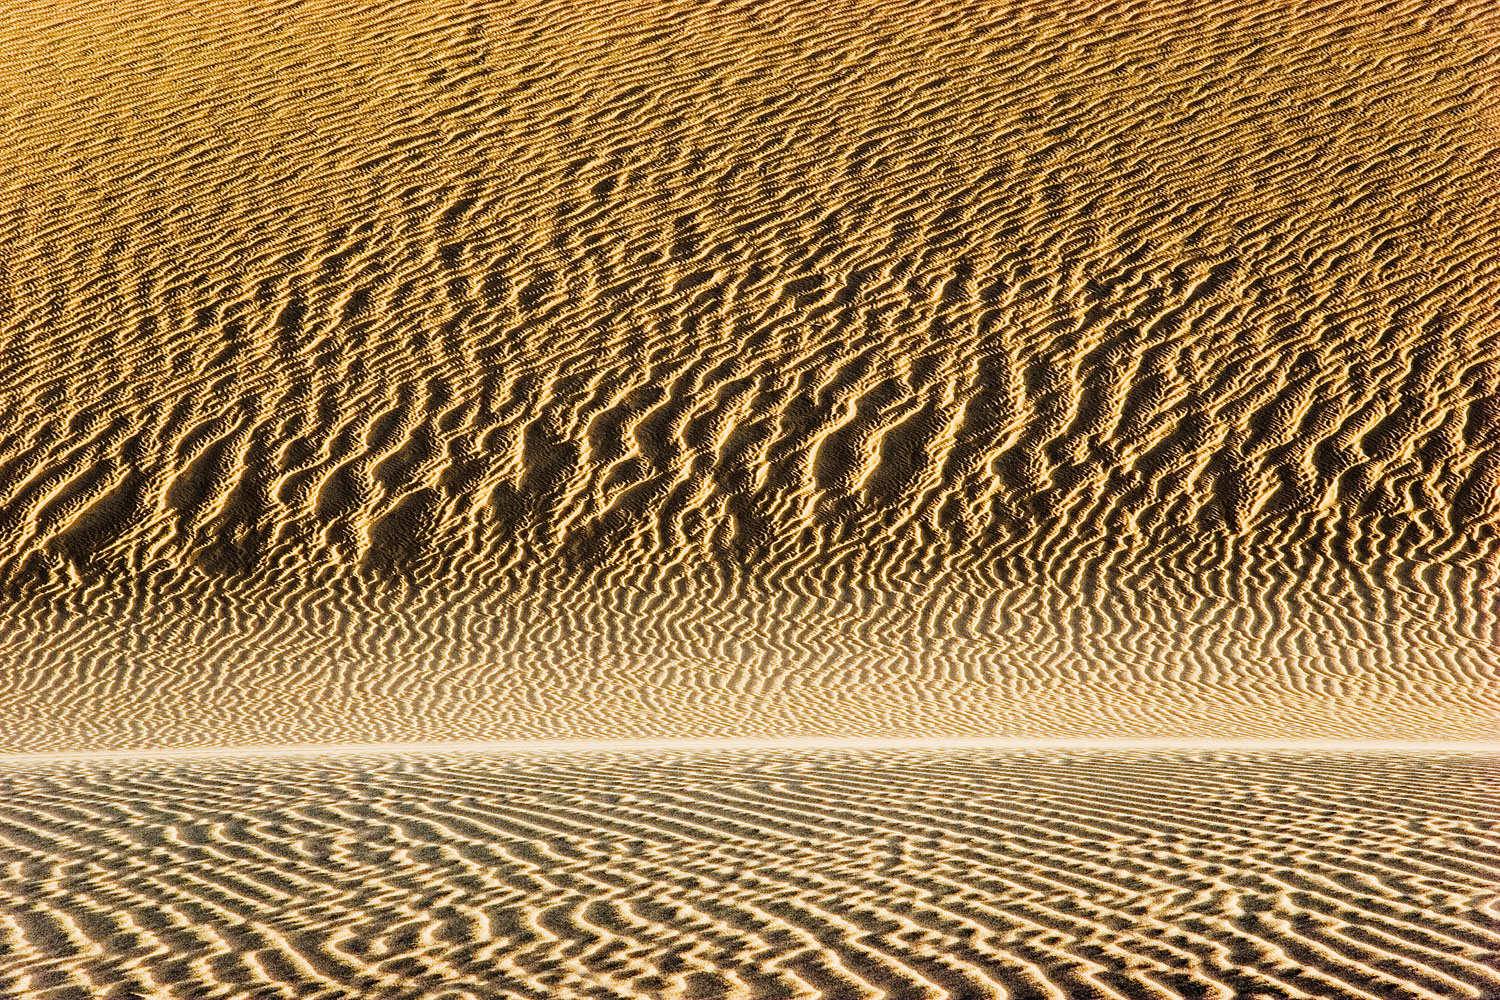 Dune Rising. Death Valley